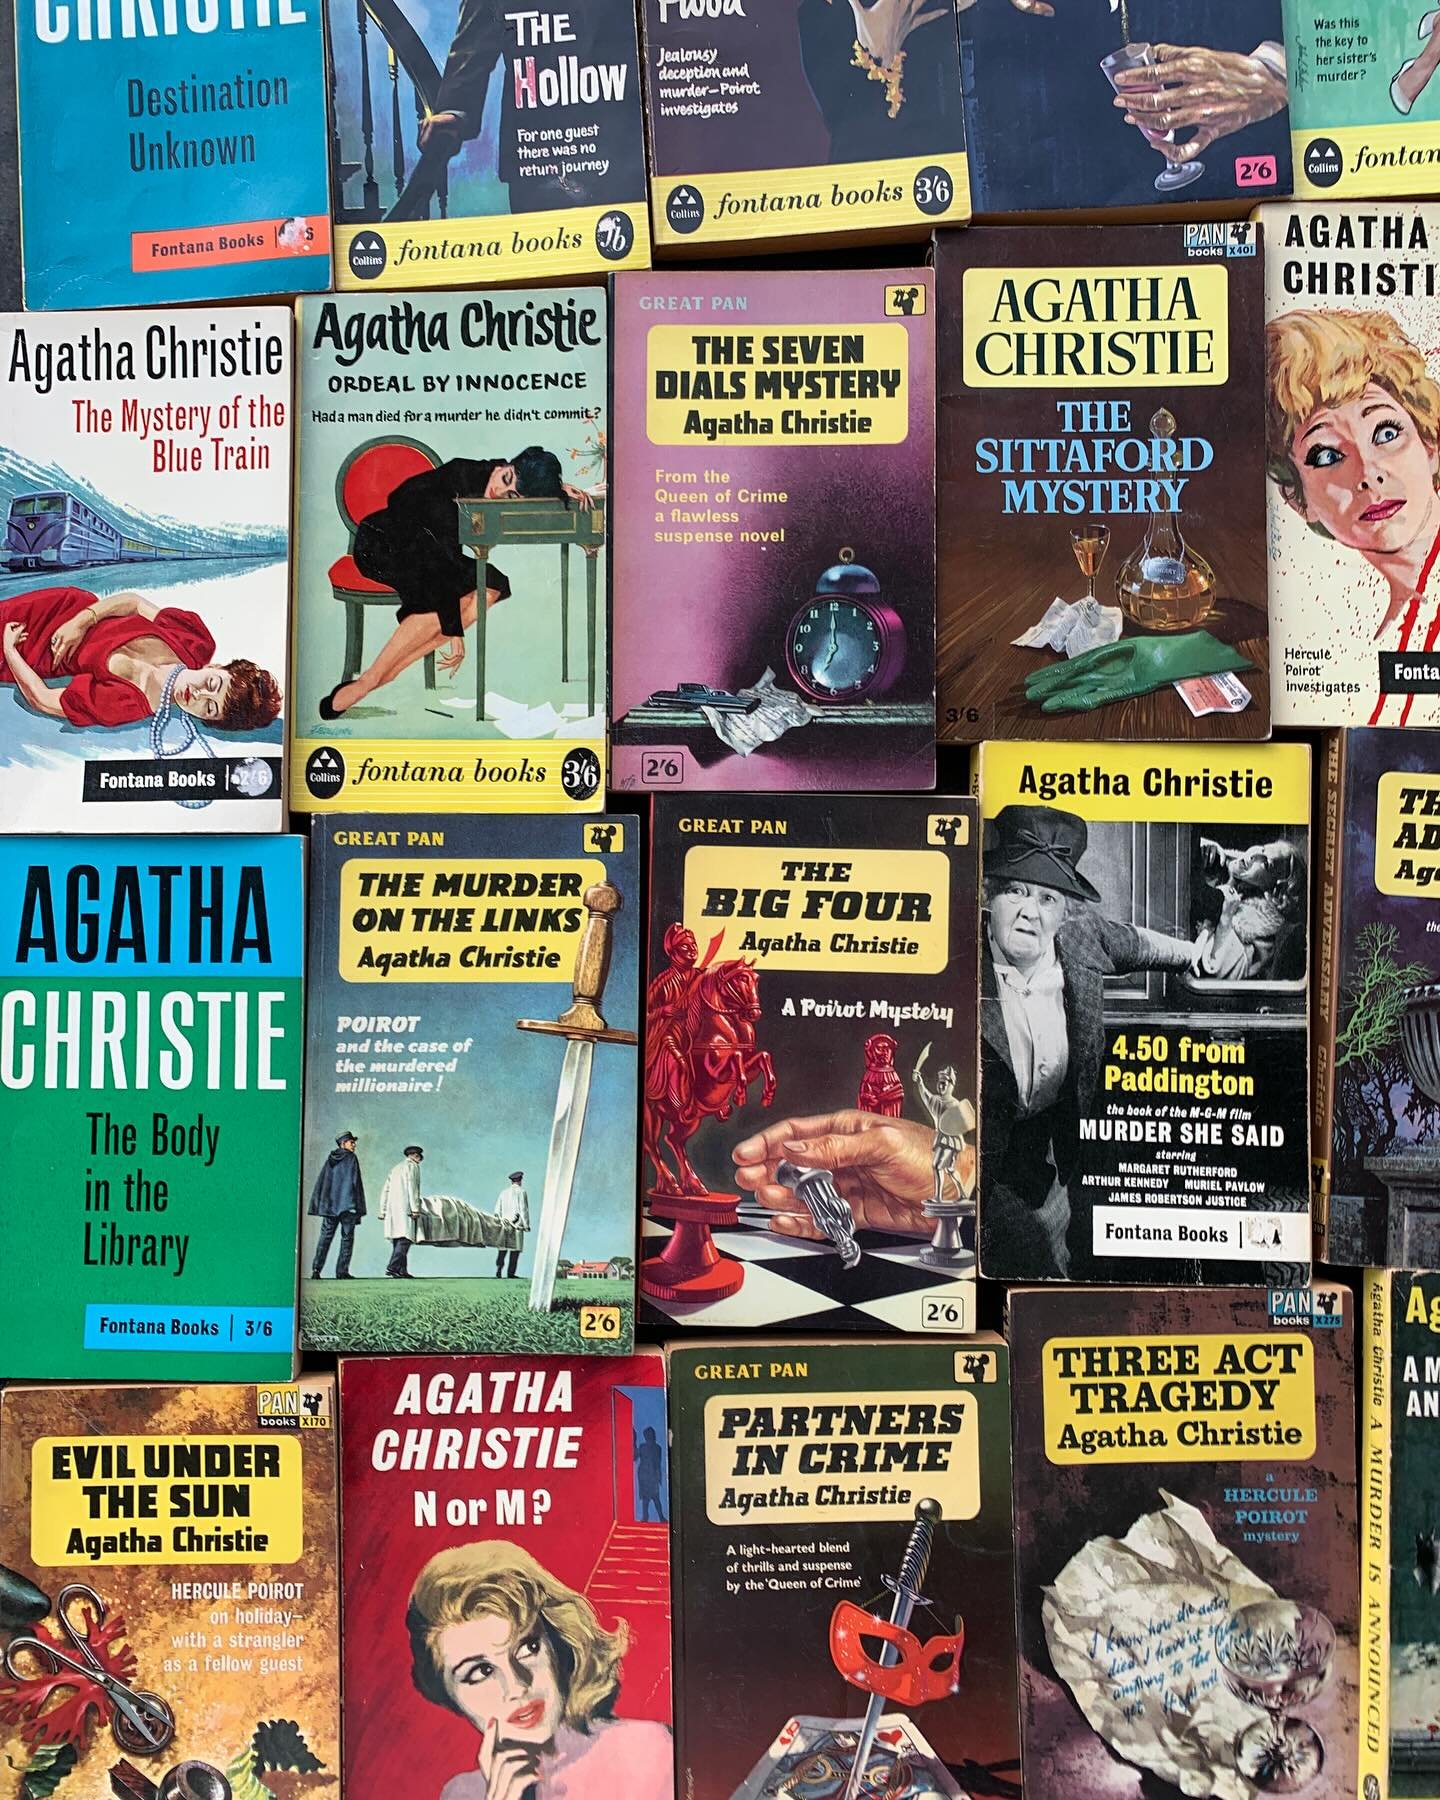 Agatha Christie paperbacks available tomorrow in the shop @greenwichmarket .
#agathachristie 
#poirot 
#missmarple 
#murder
#whodunnit 
#crimefiction 
#classiccrime 
#vintagepaperbacks 
#bookshop
#paperbackbooks